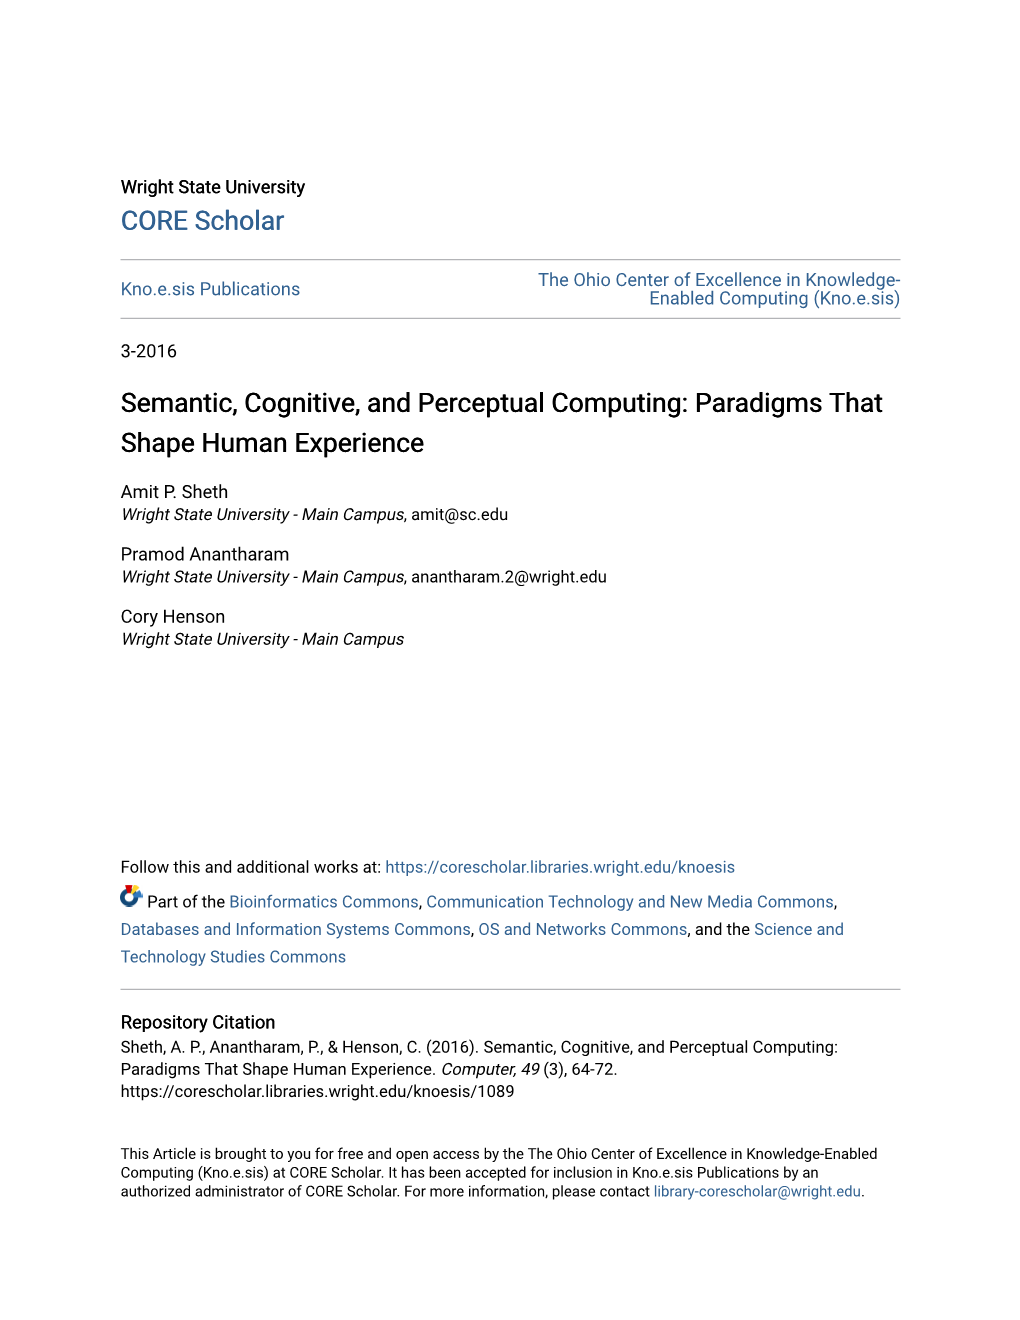 Semantic, Cognitive, and Perceptual Computing: Paradigms That Shape Human Experience